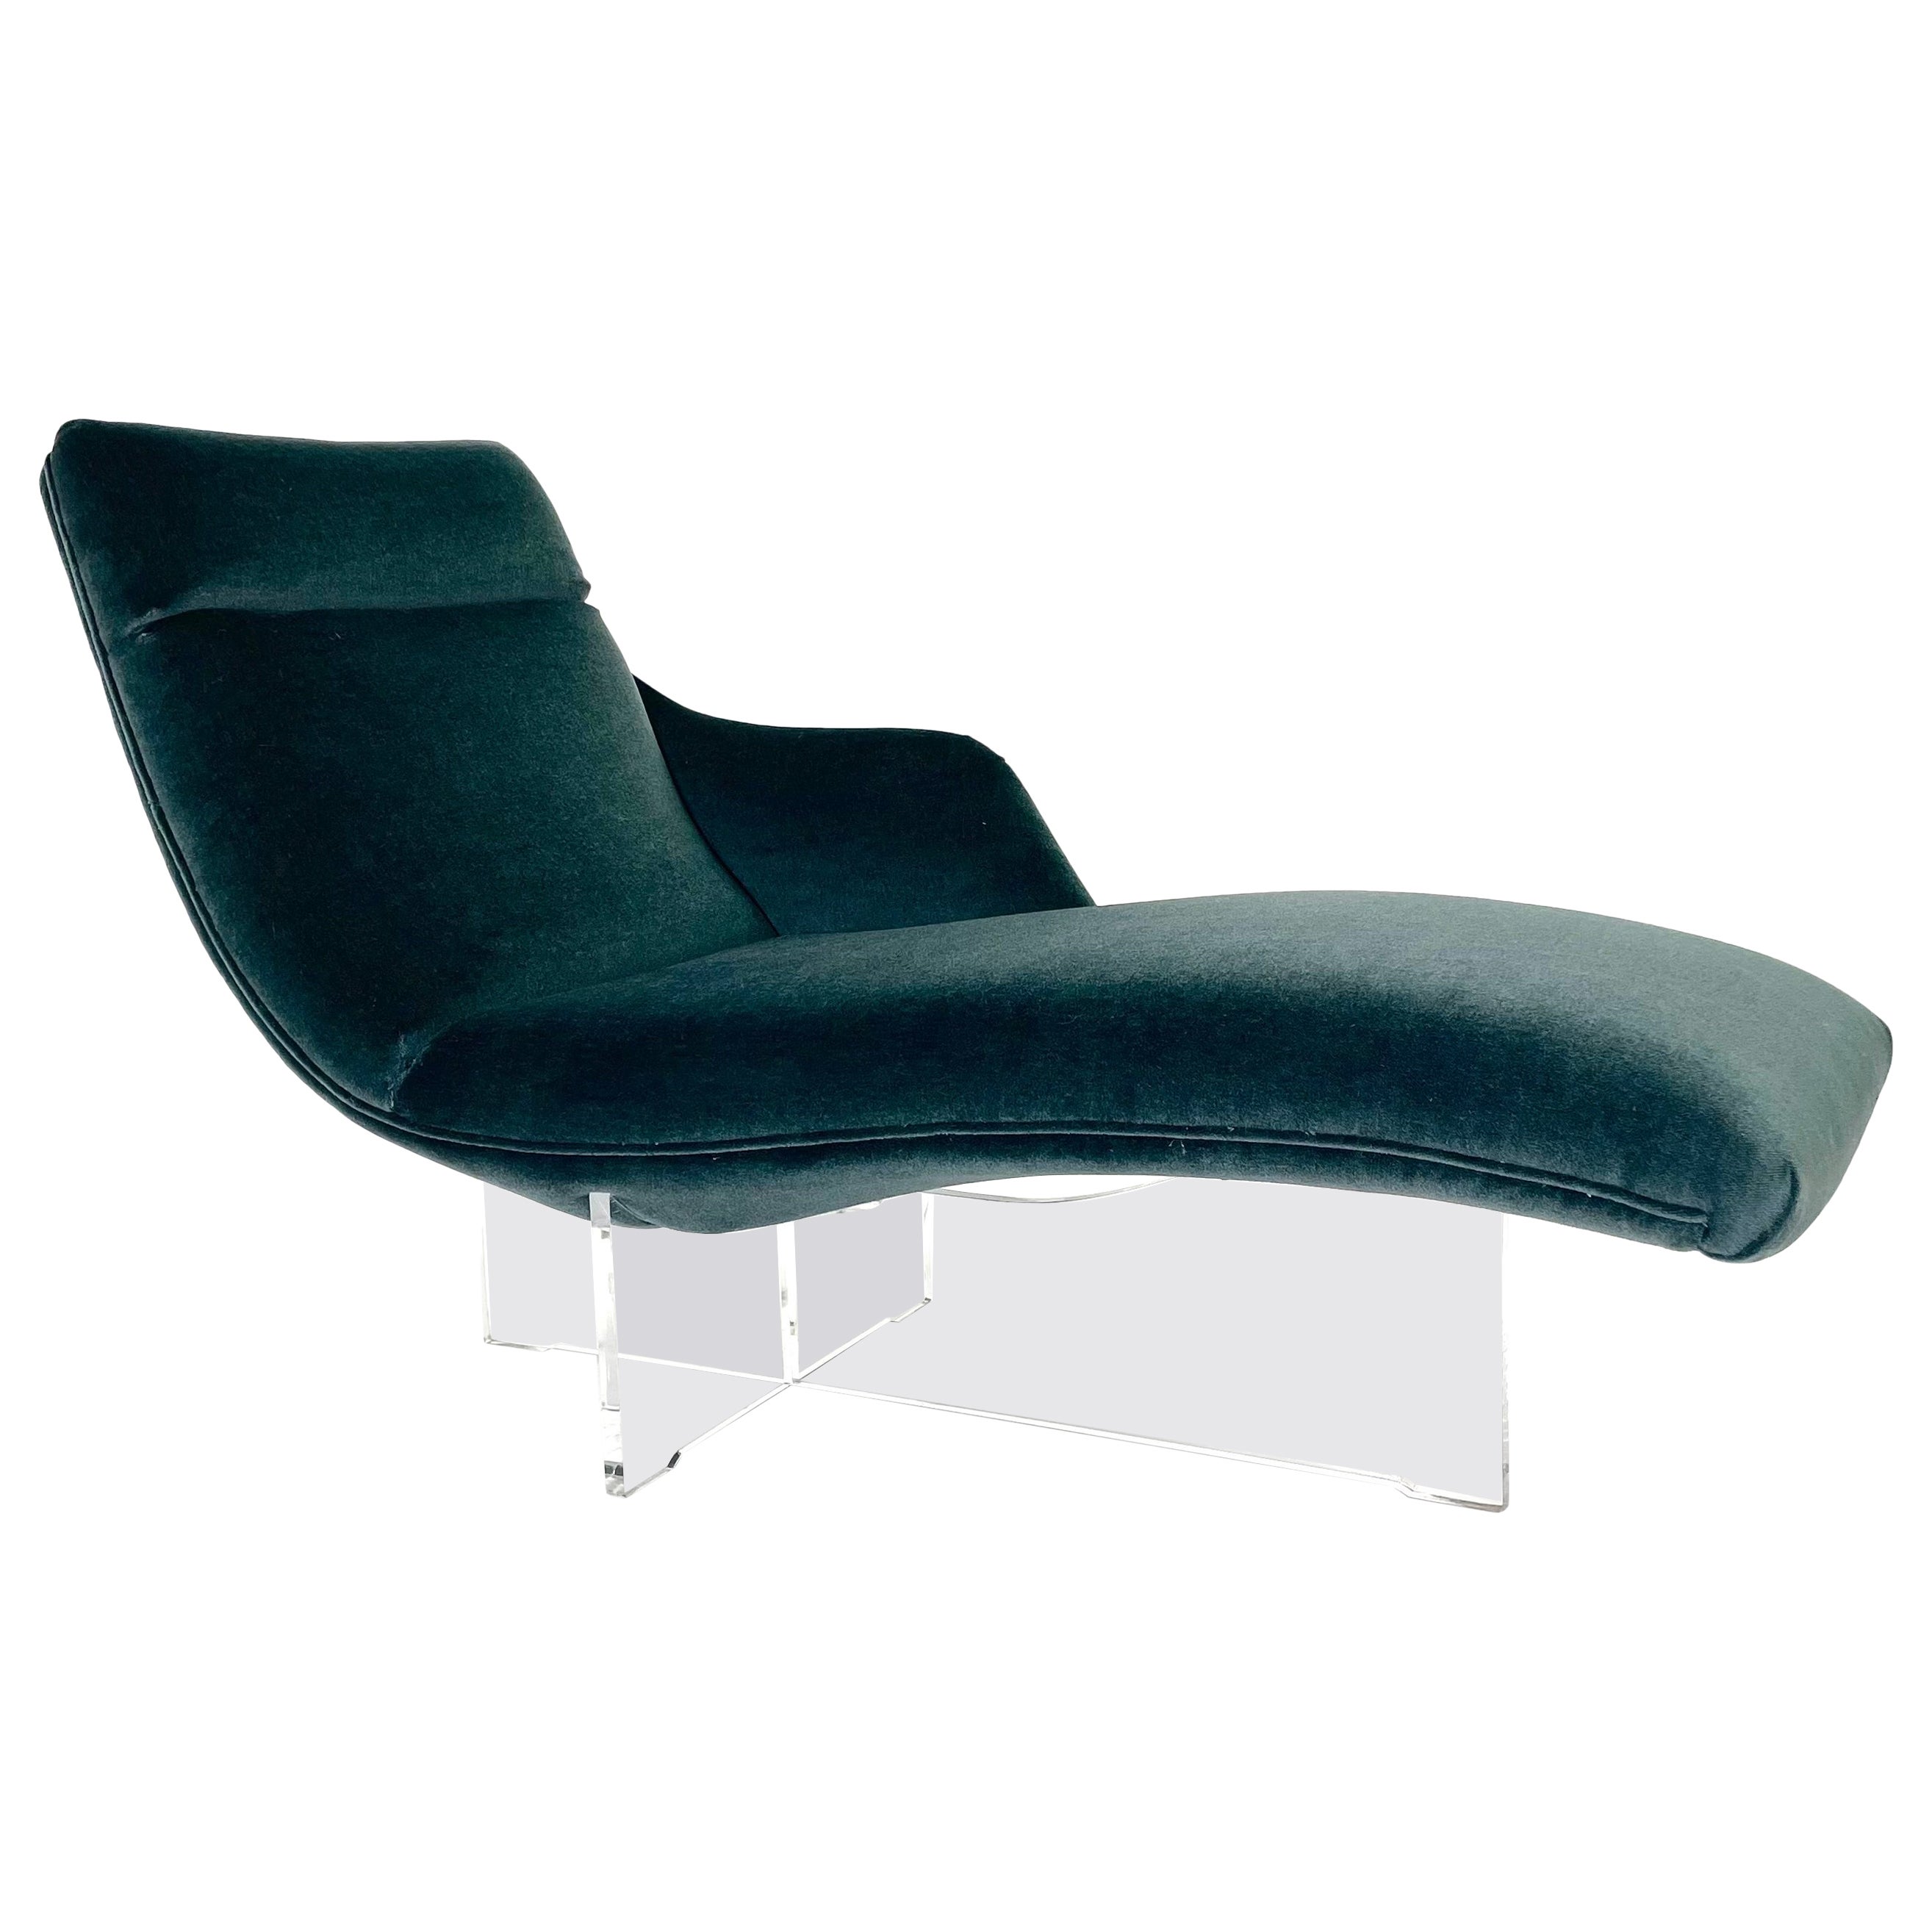 Vladimir Kagan Erica Chaise Lounge Chair in Mohair For Sale